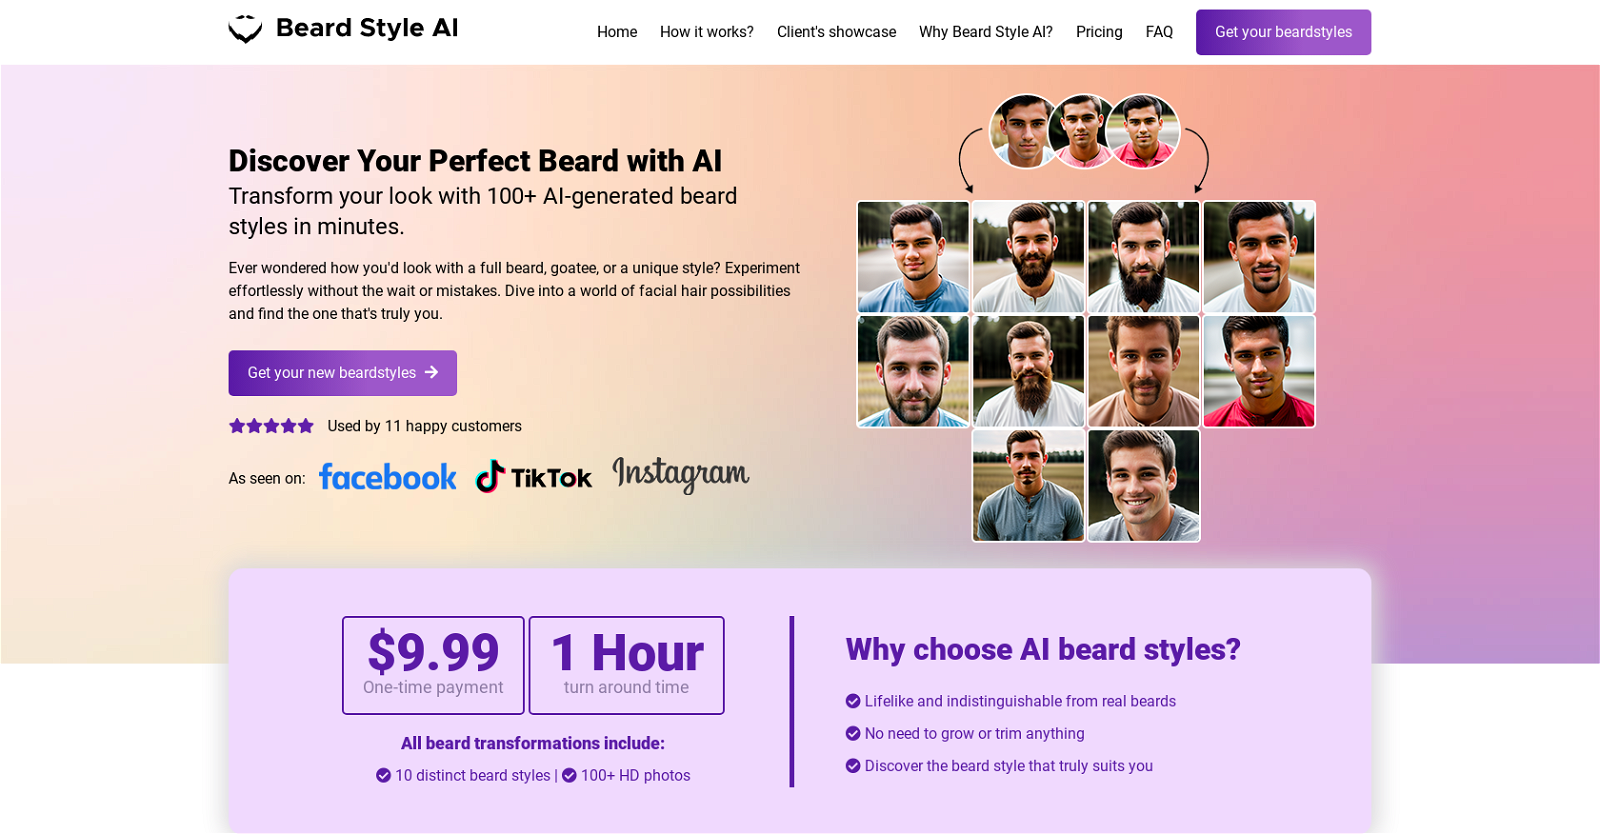 Beard Style AI website